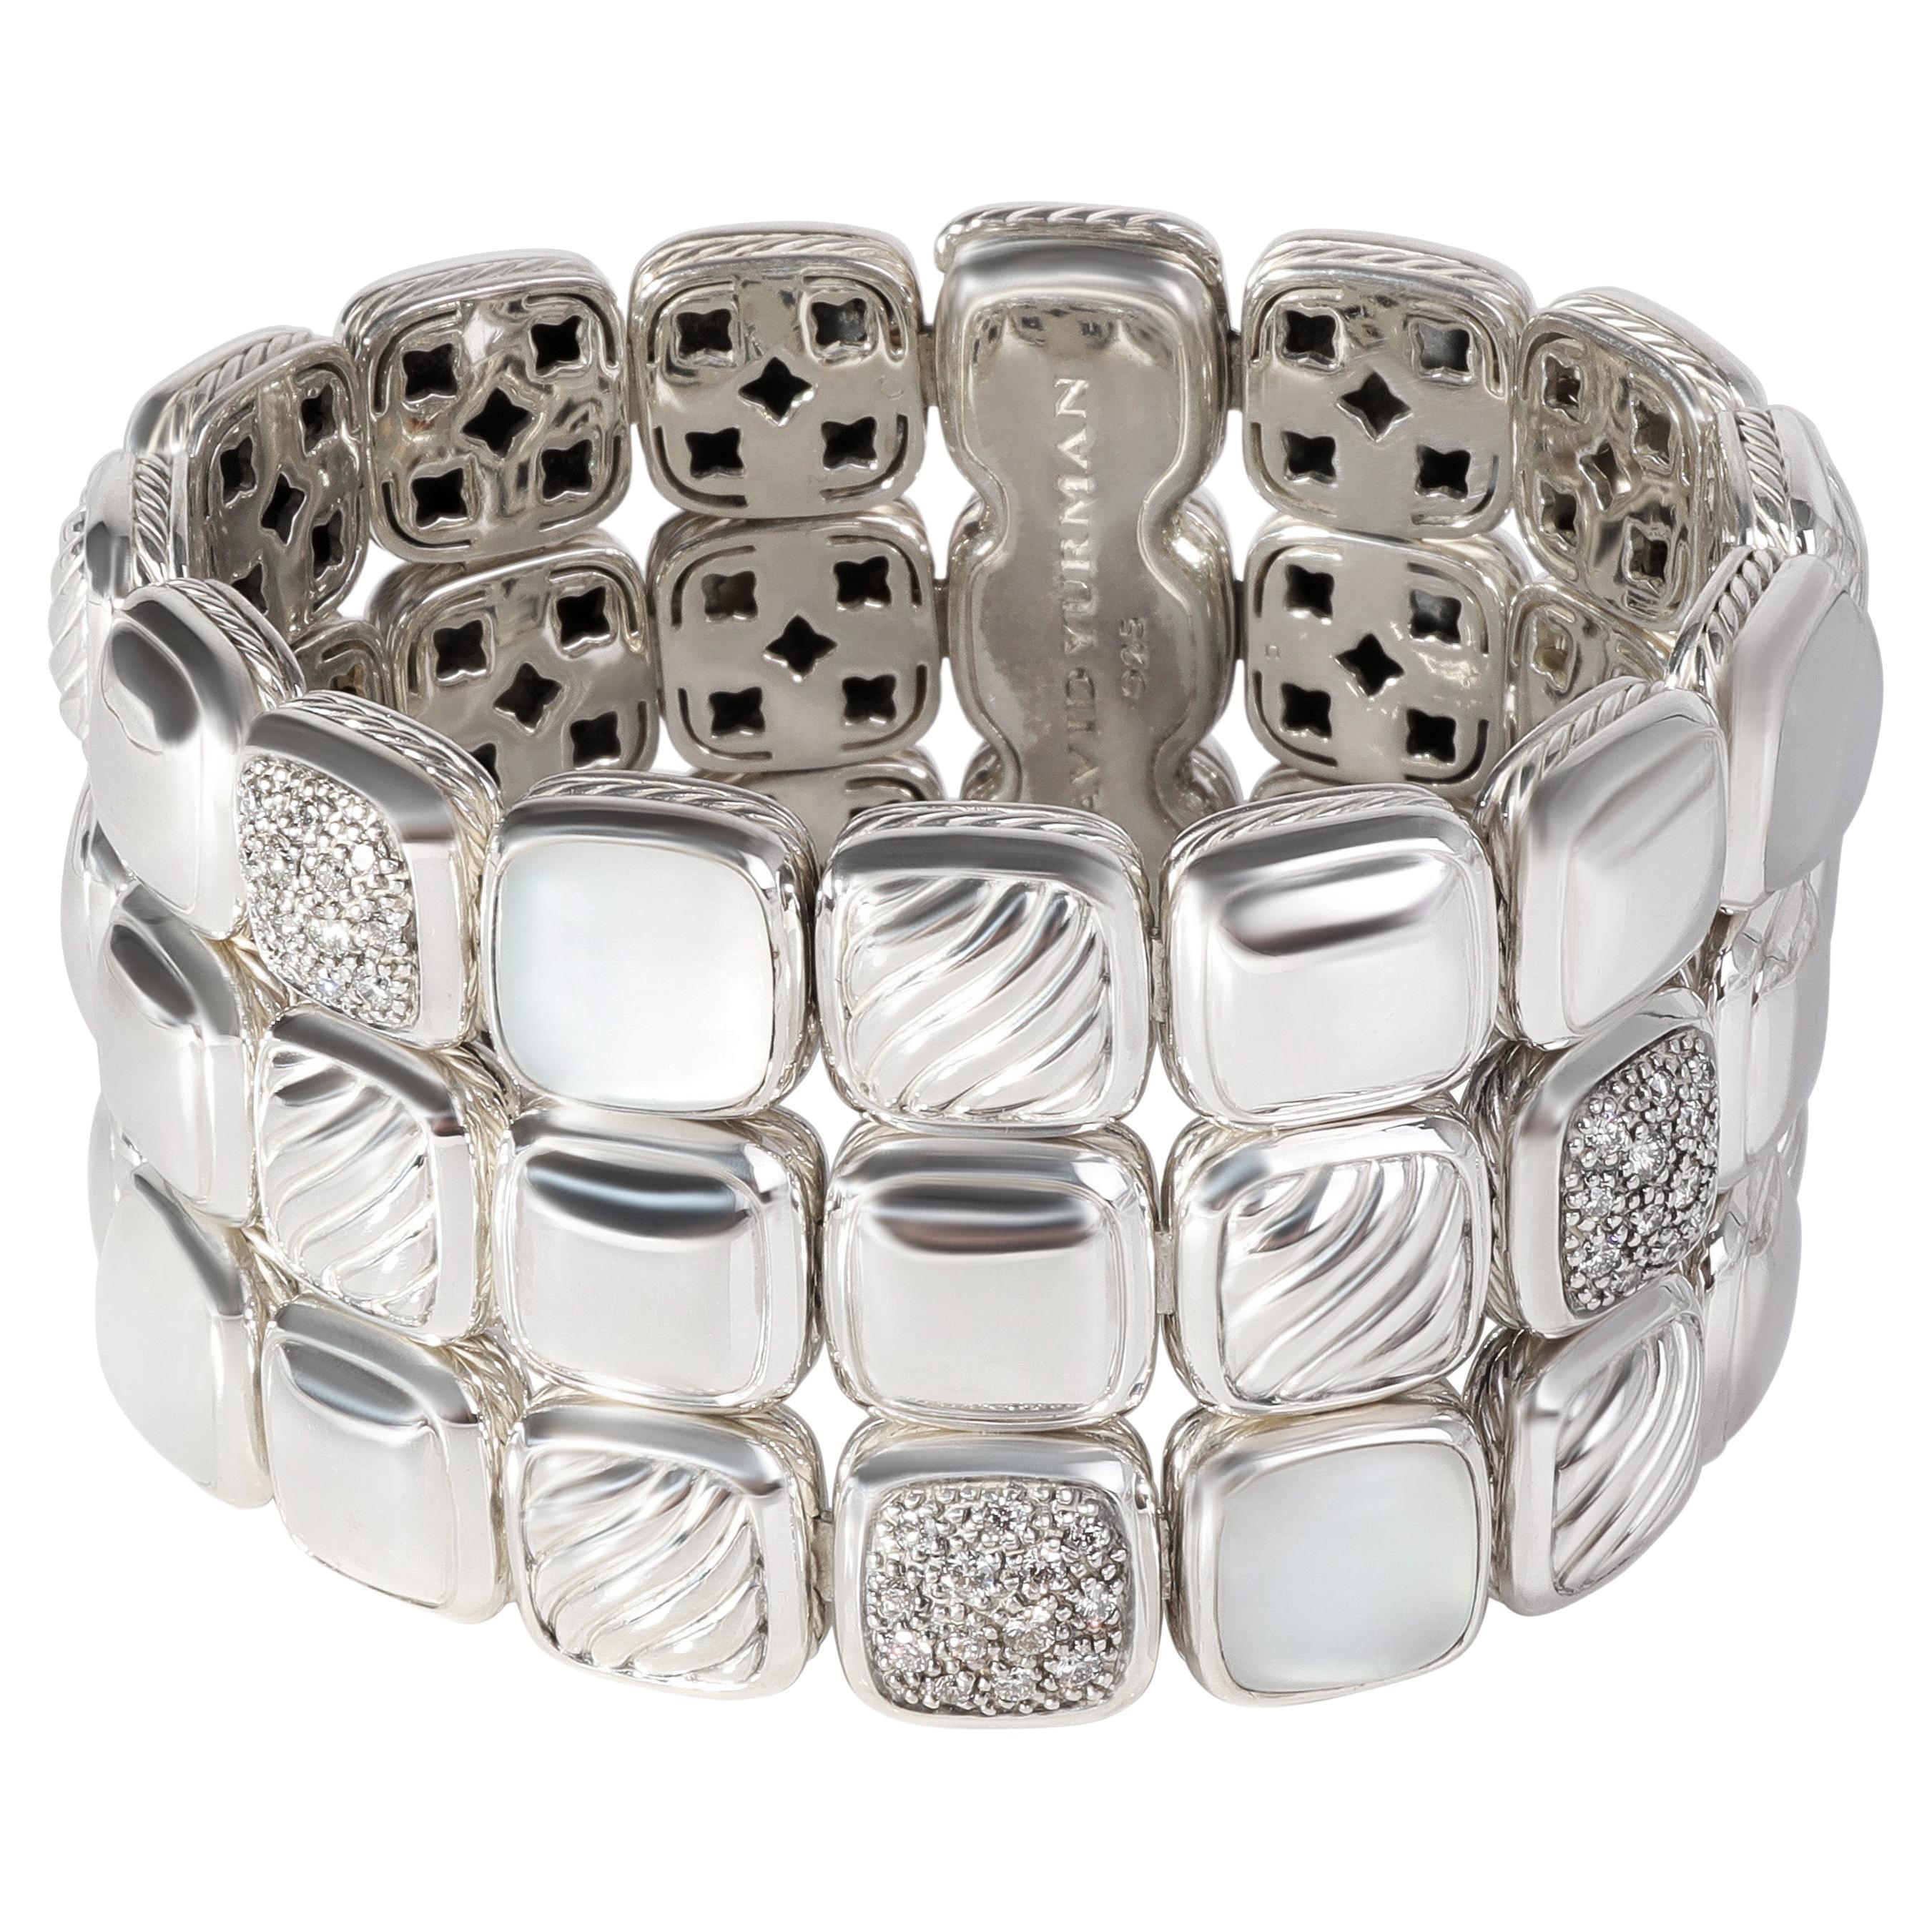 David Yurman Chiclet Moonstone Diamond Bracelet in Sterling Silver, '0.53 Ctw'